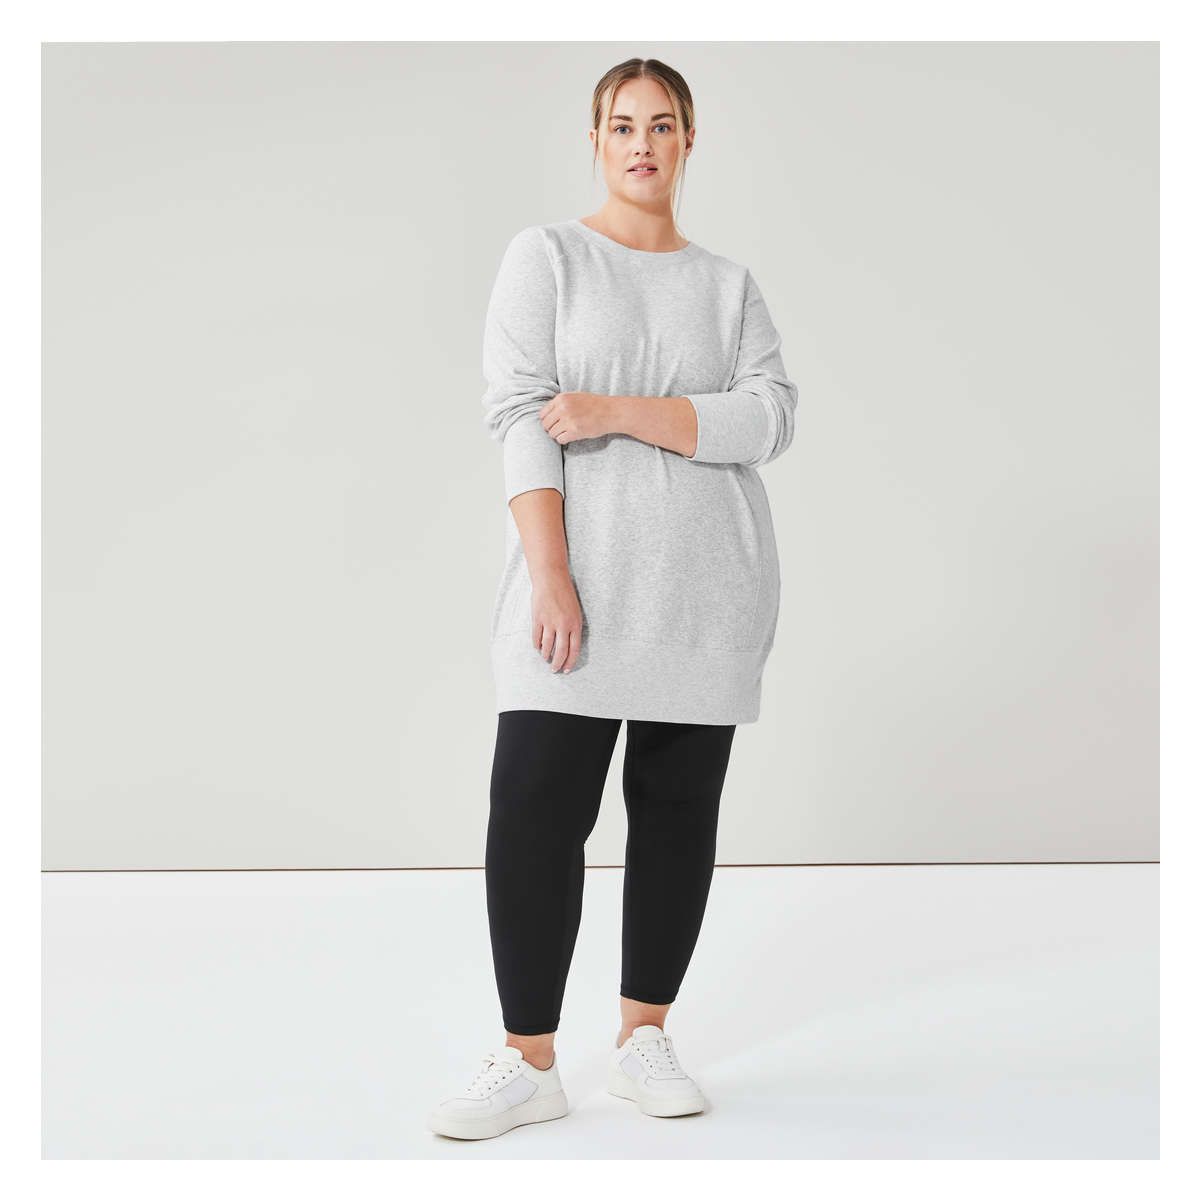 White Sweatshirt Tunic, Leggings, Blush Sneakers and Grey